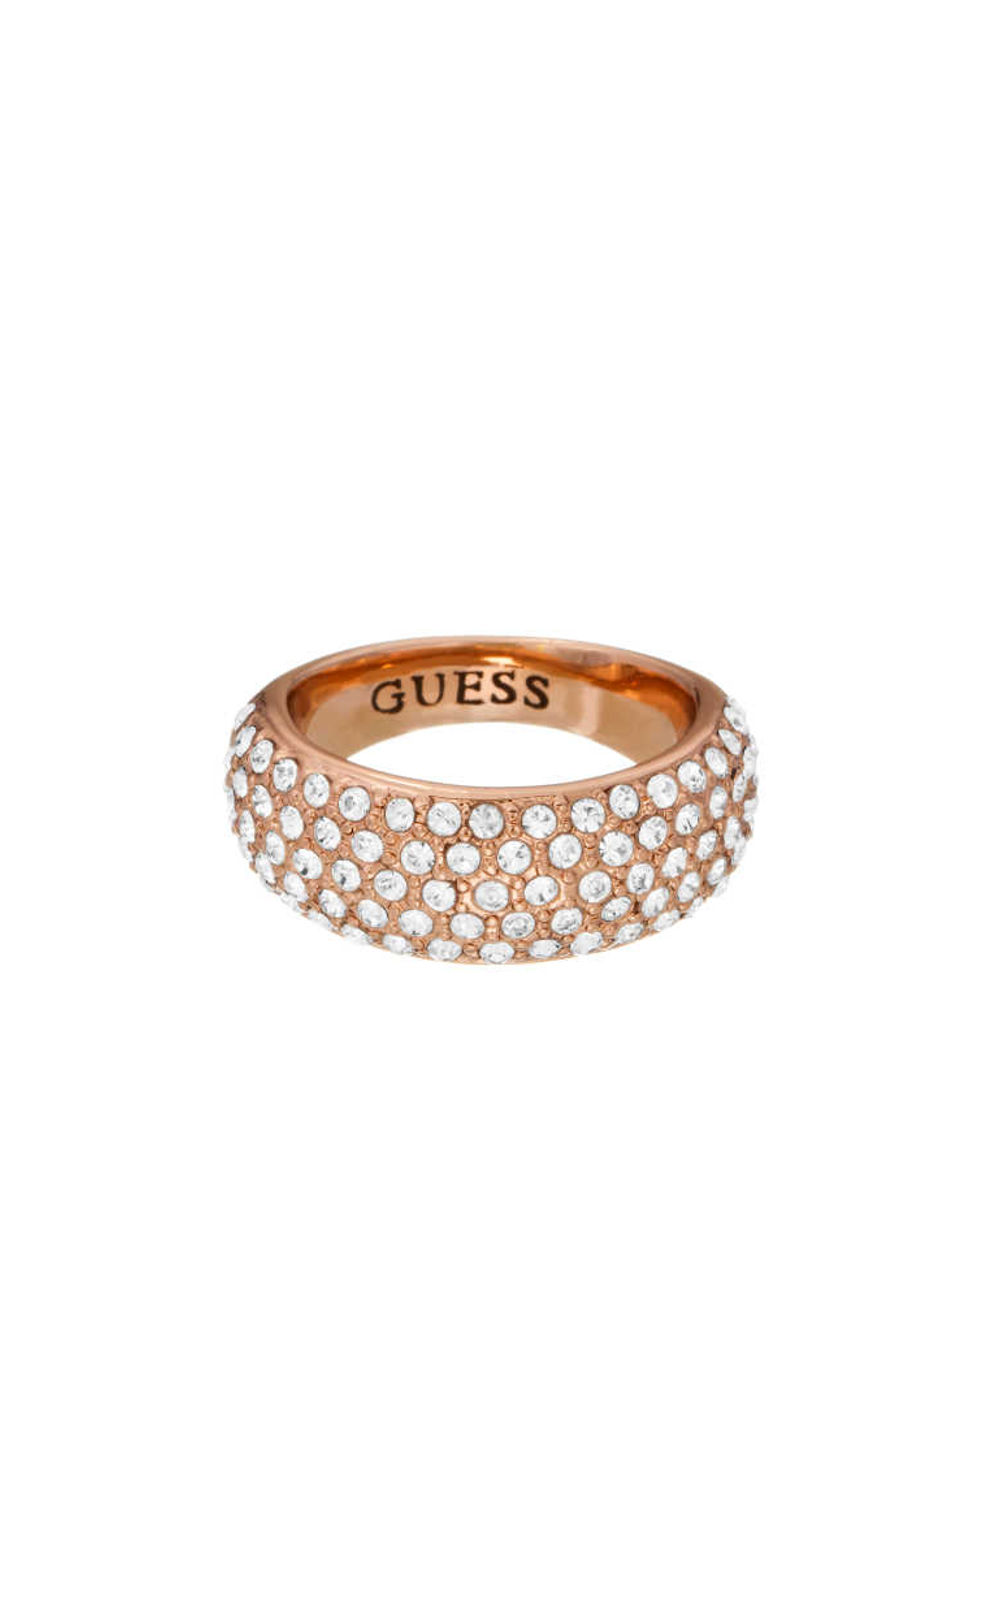 GUESS FAUX UBR51433-52 Ροζ Χρυσό Δαχτυλίδι Με Πέτρες